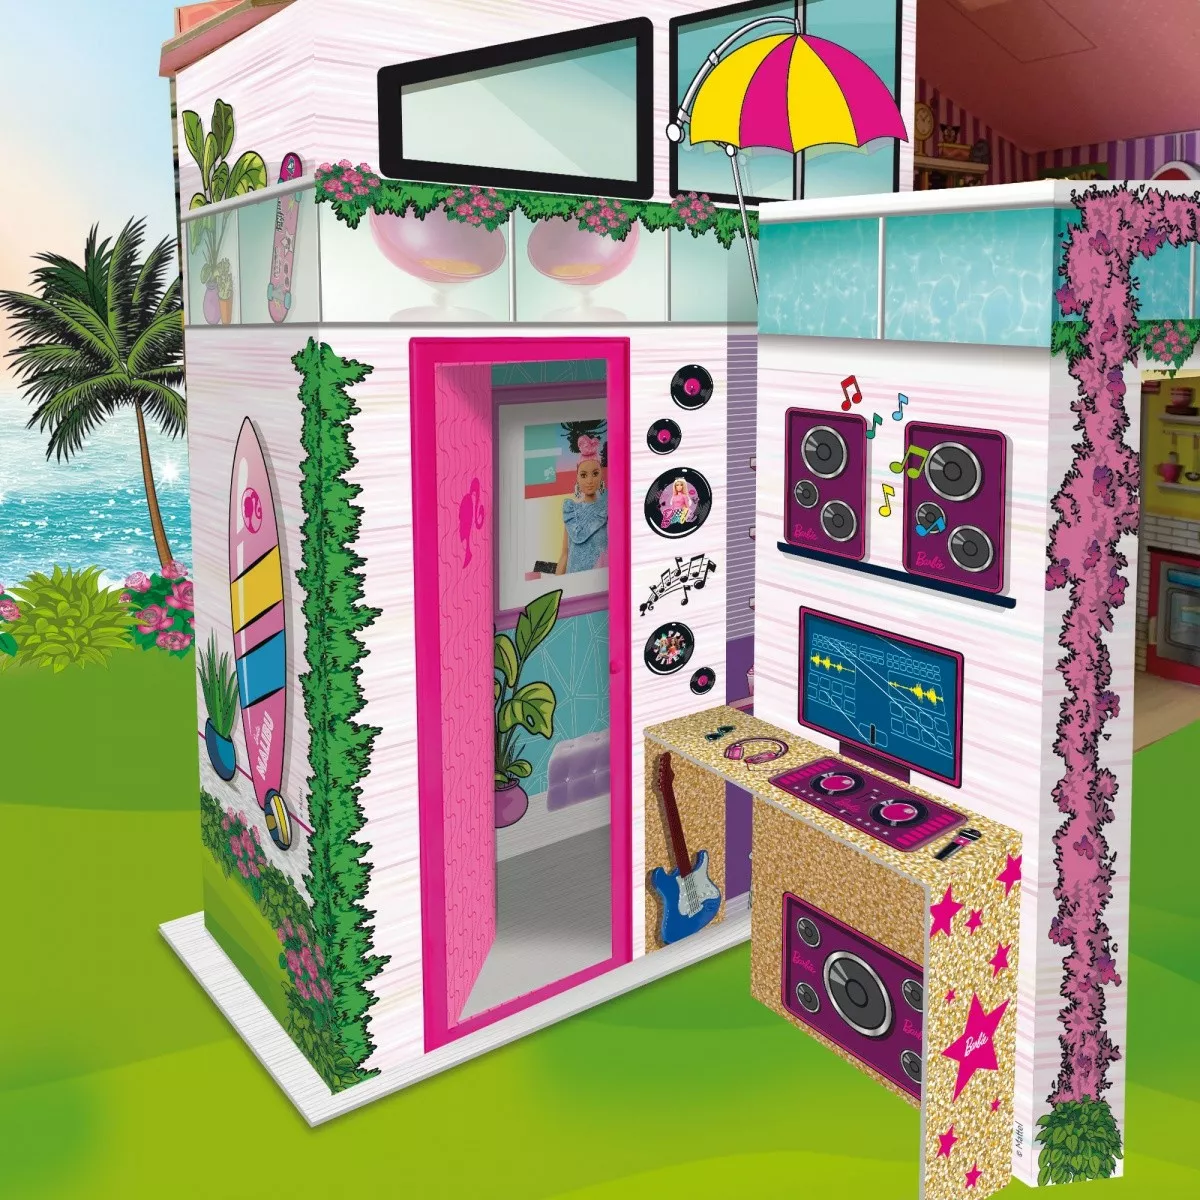 Lisciani Domek dla lalek Dream summer Barbie